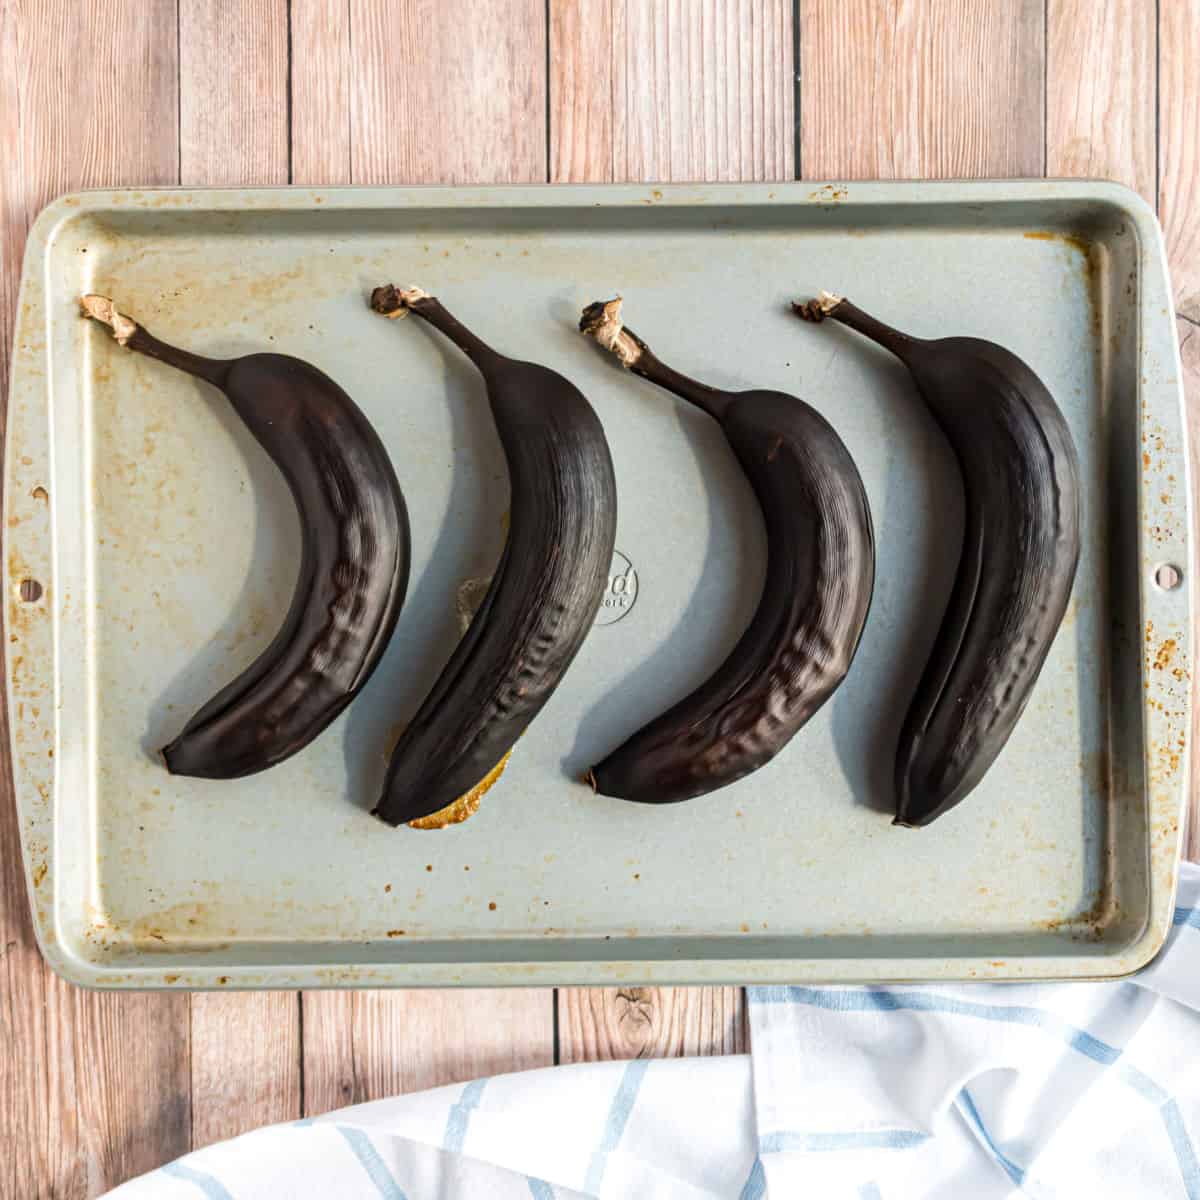 How To Ripen Bananas Shugary Sweets